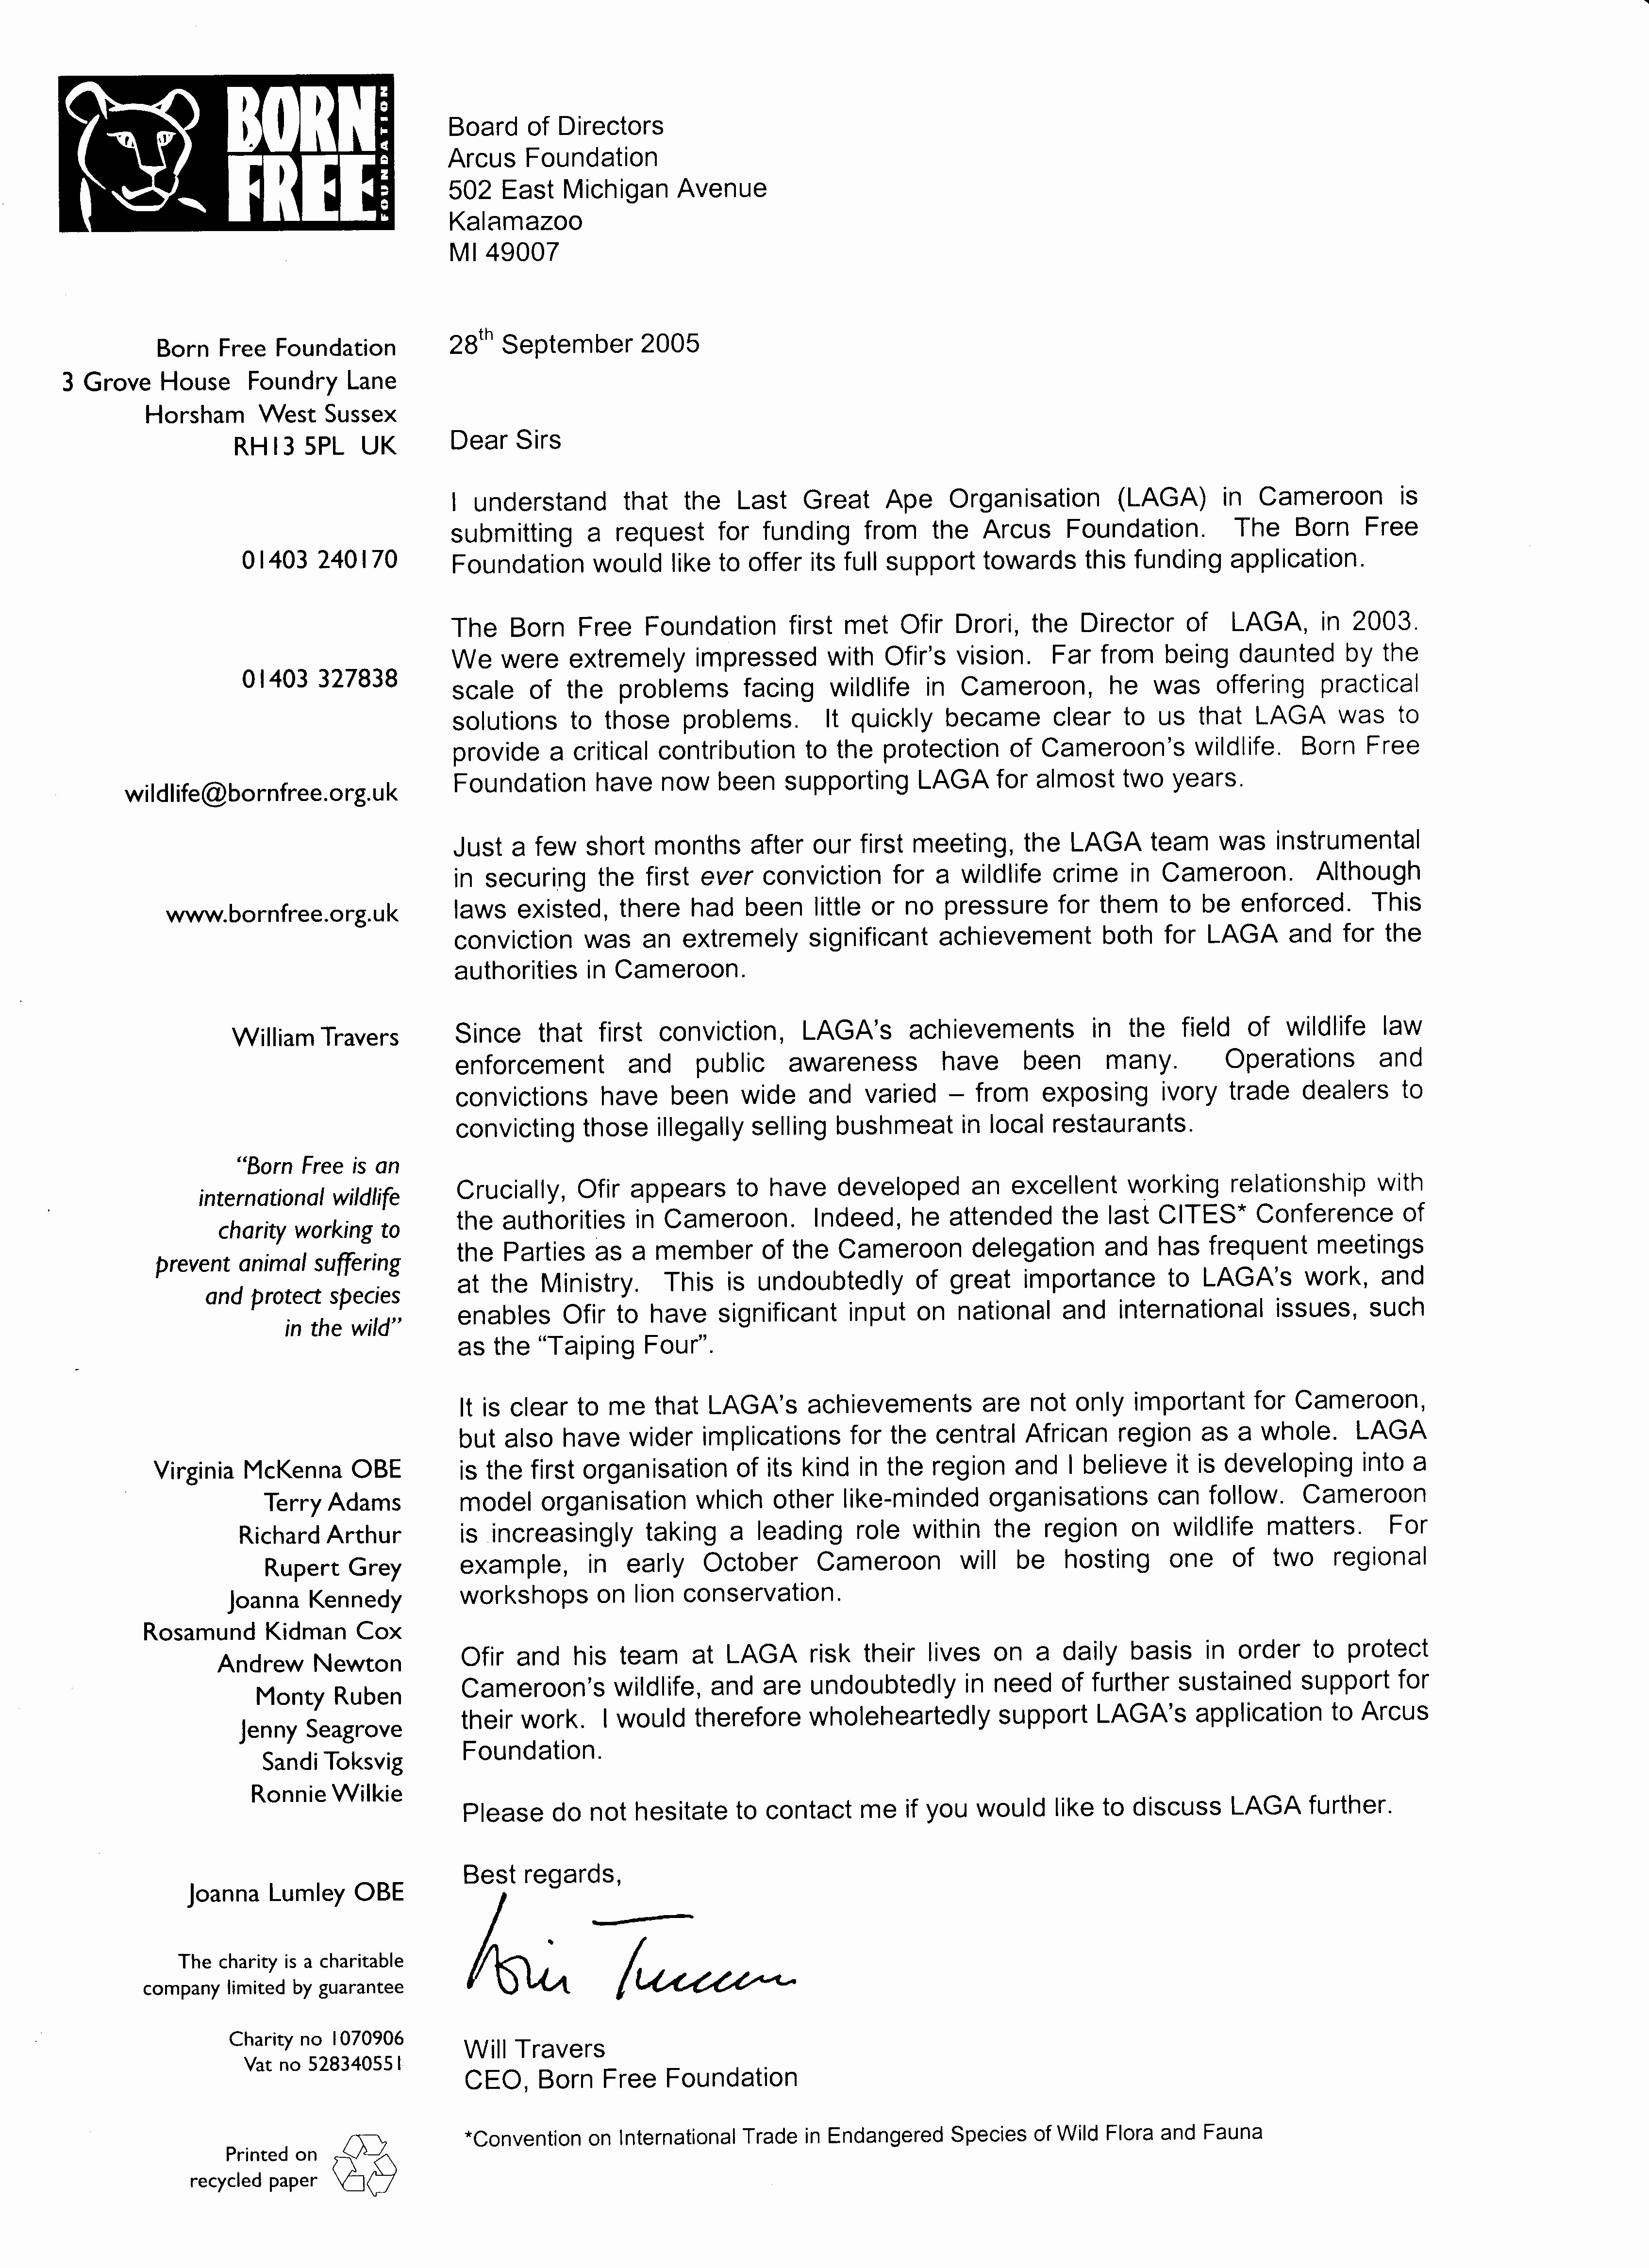 Law Enforcement Letter Of Recommendation Luxury Laga Wildlife Law Enforcement Mendations